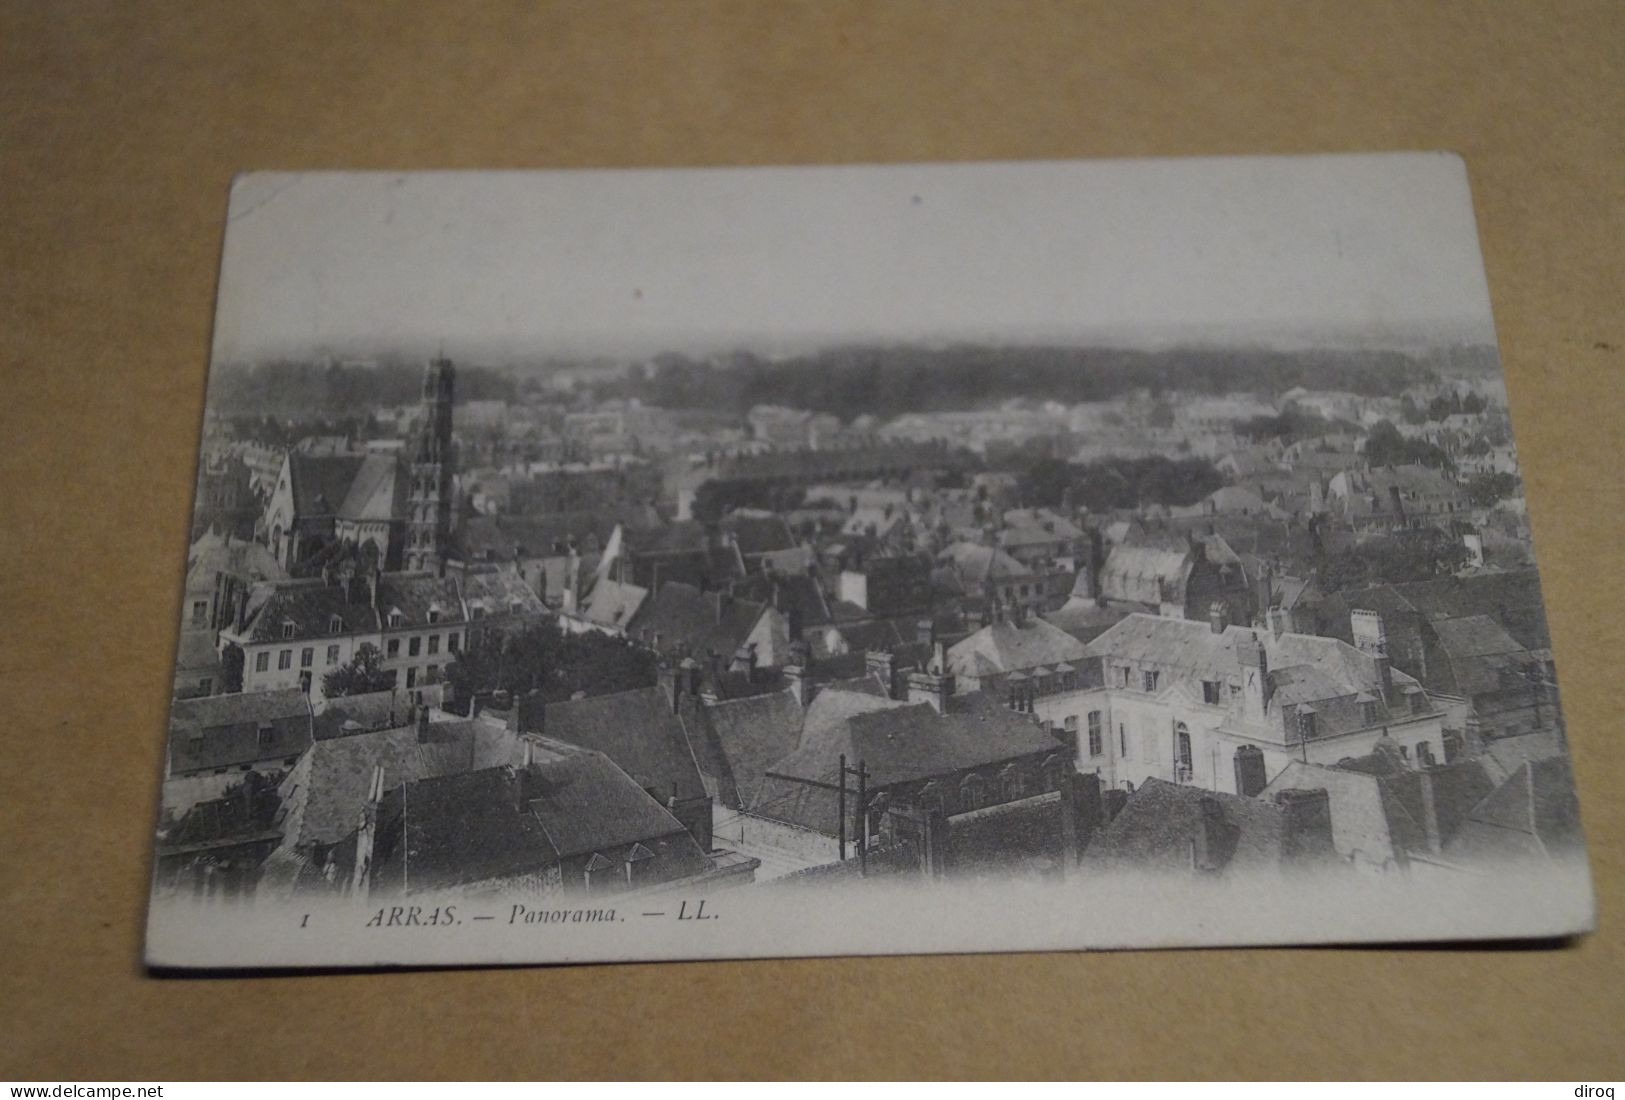 Belle carte ancienne,Arras ,1910,Panorama,pour collection